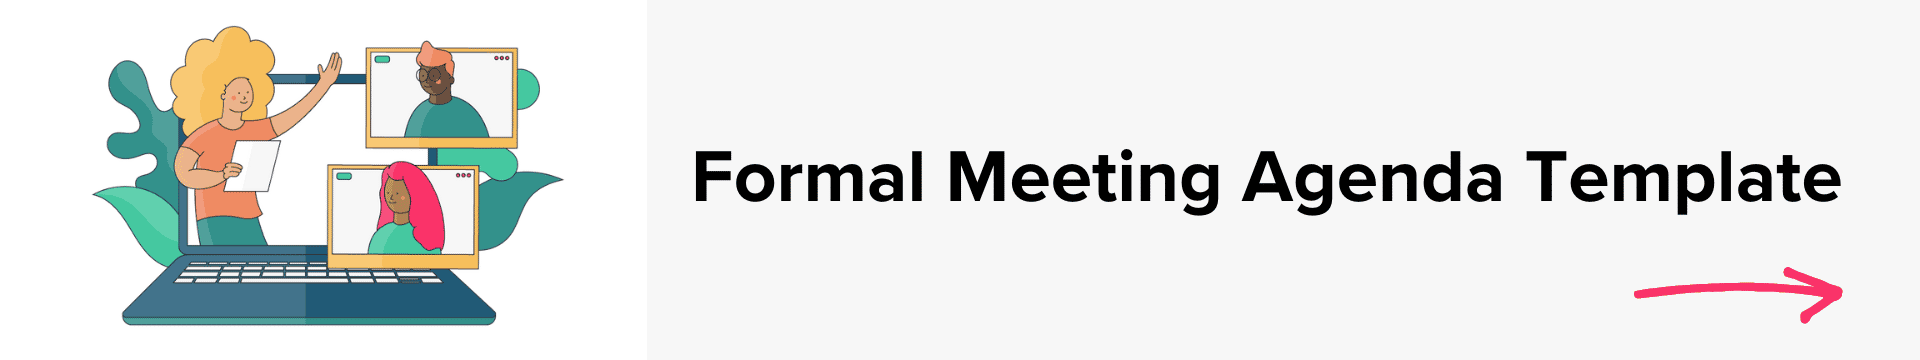 a formal meeting agenda template